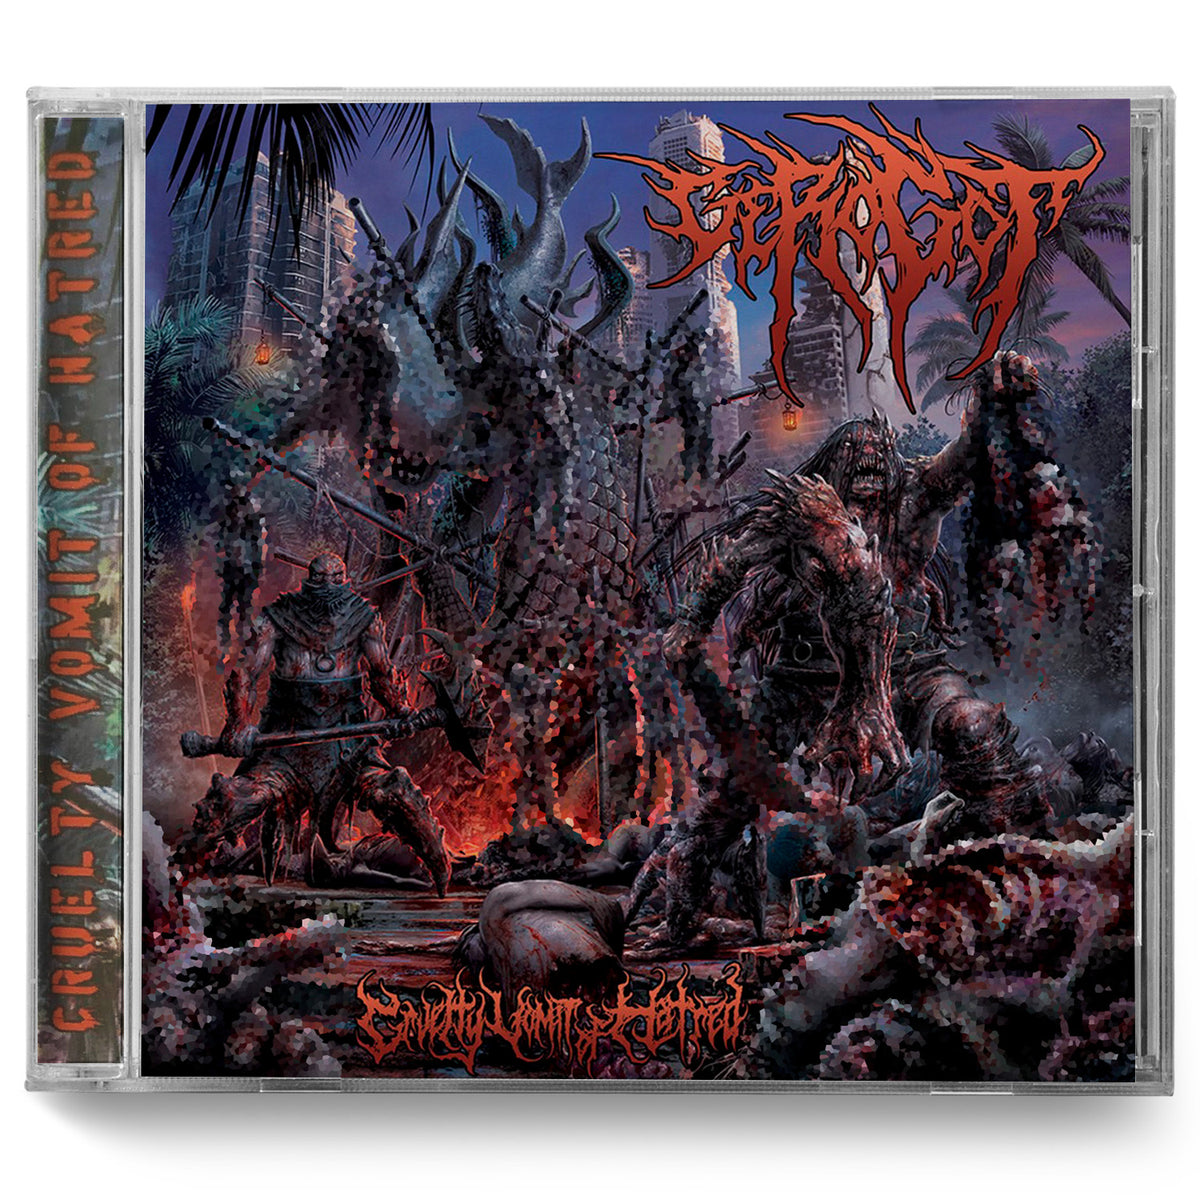 Gerogot "Cruelty Vomit of Hatred" CD - Miasma Records